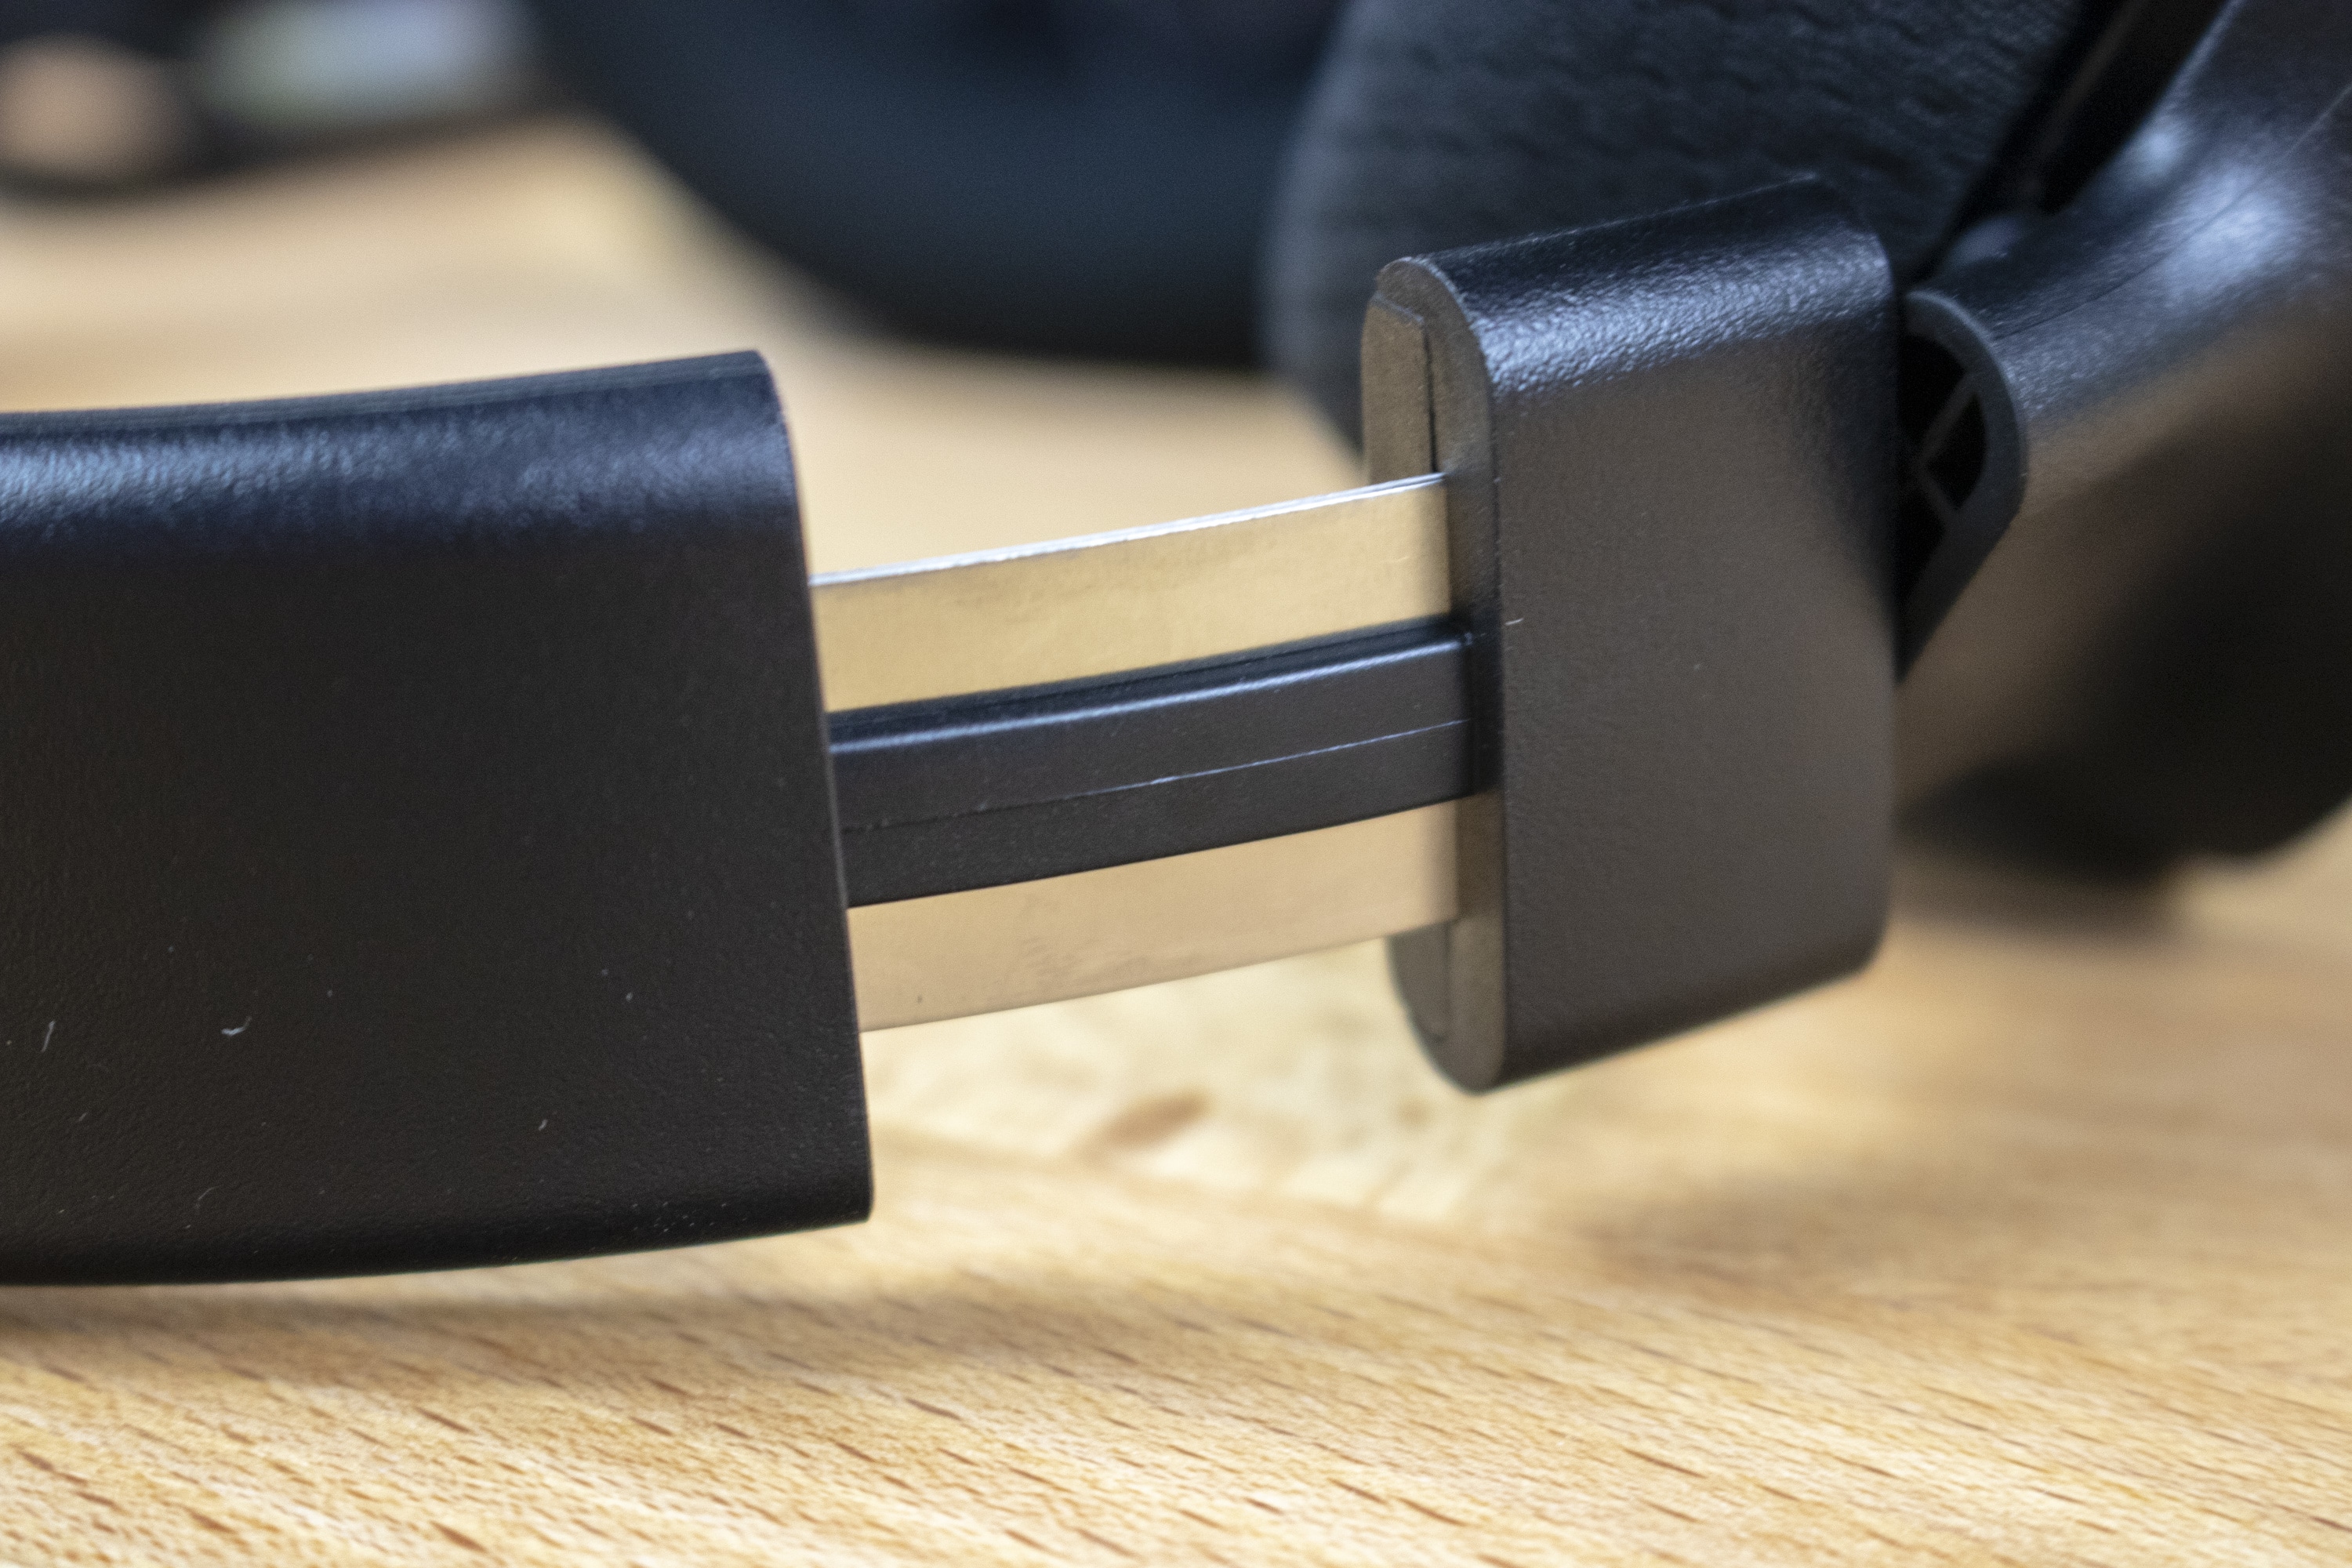 SteelSeries Arctis 1: Affordable Gaming Headset Reviewed